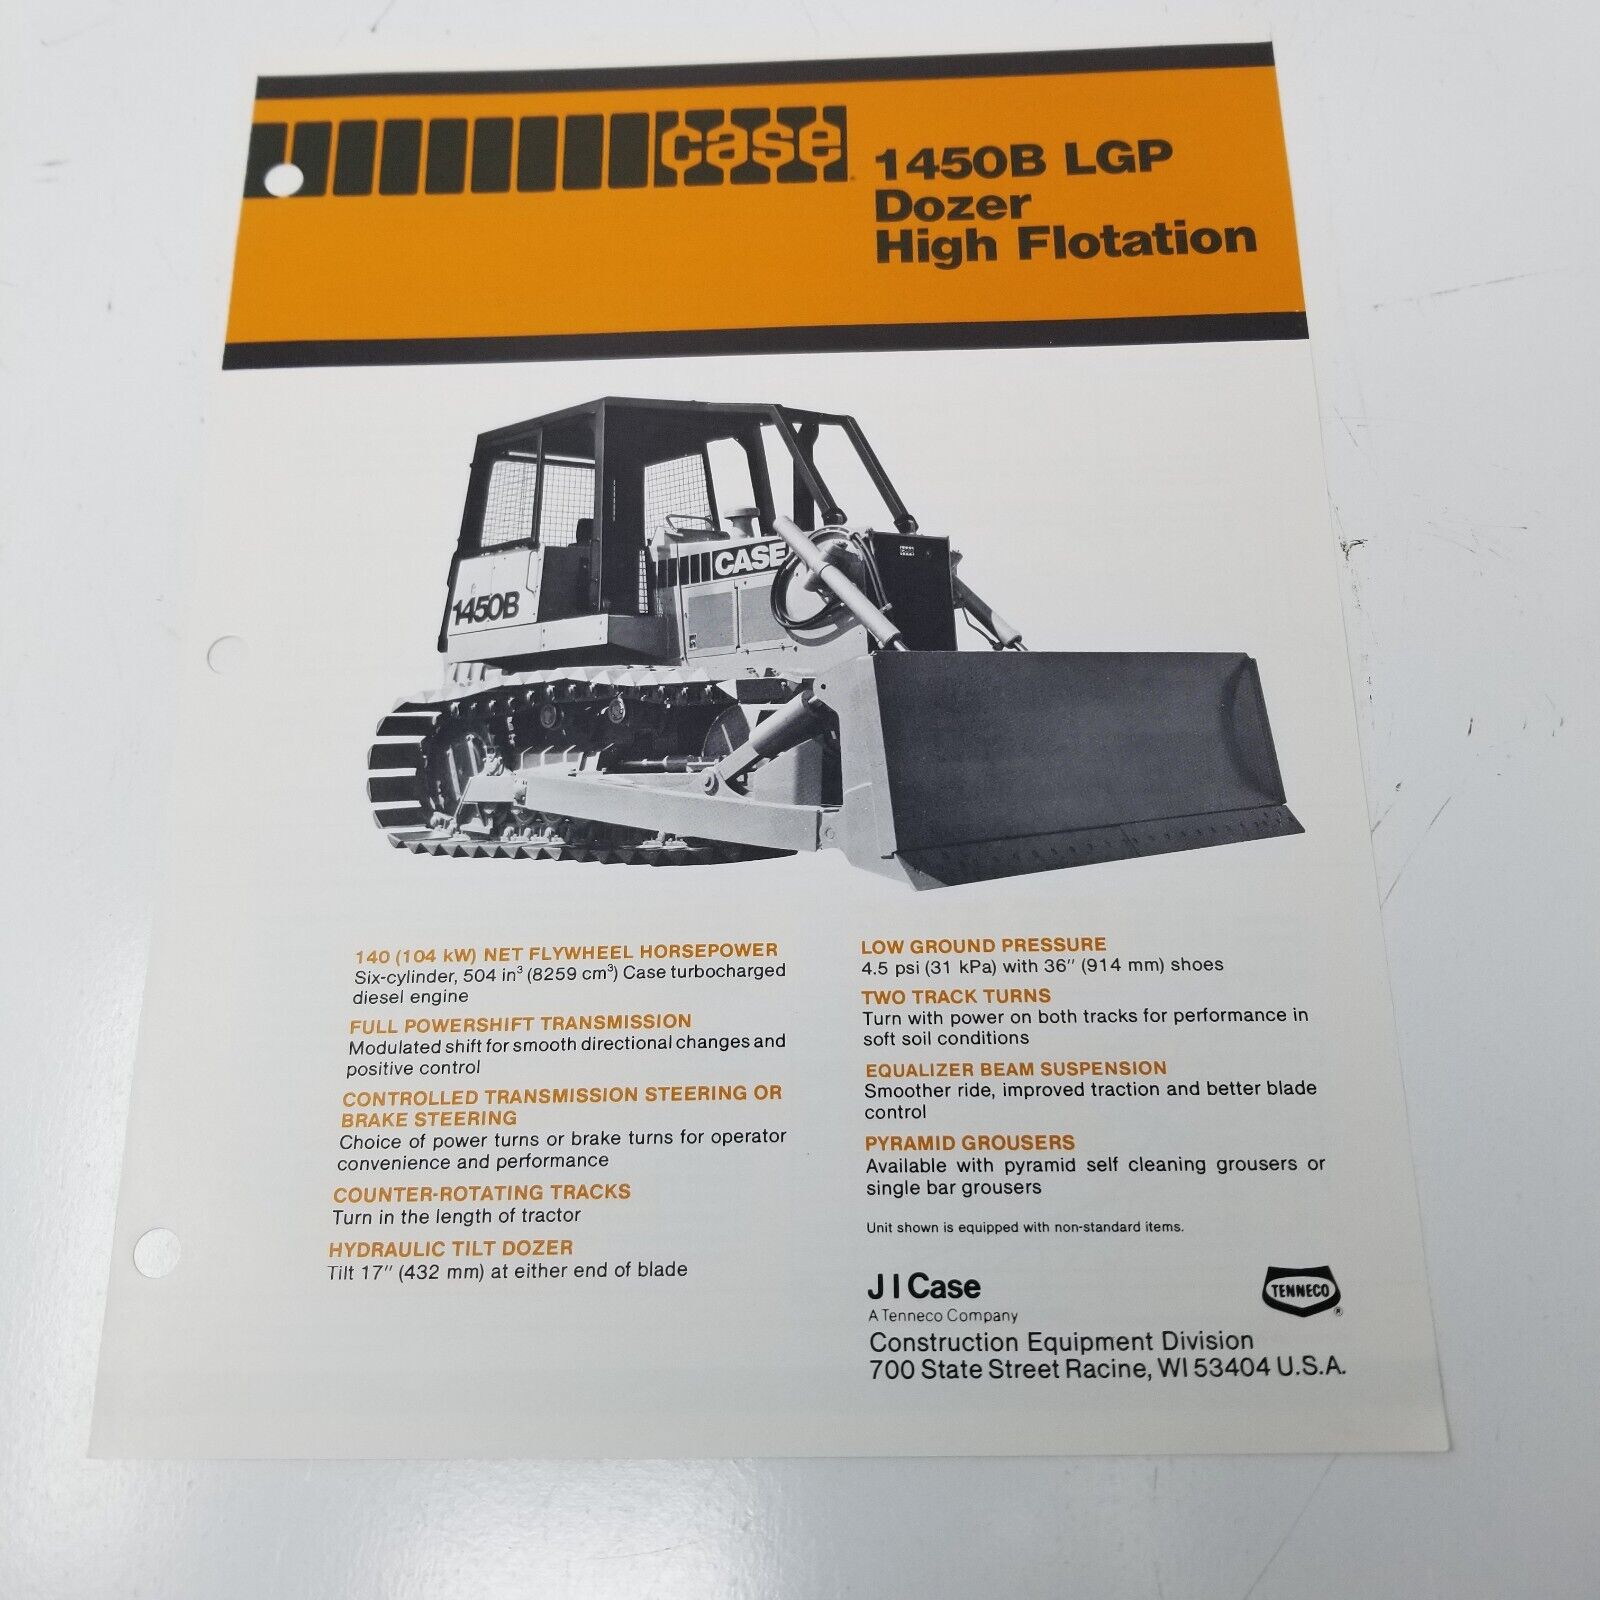 Case 1450B LGP Dozer High Flotation Sales Brochure 1980 Specifications Photos